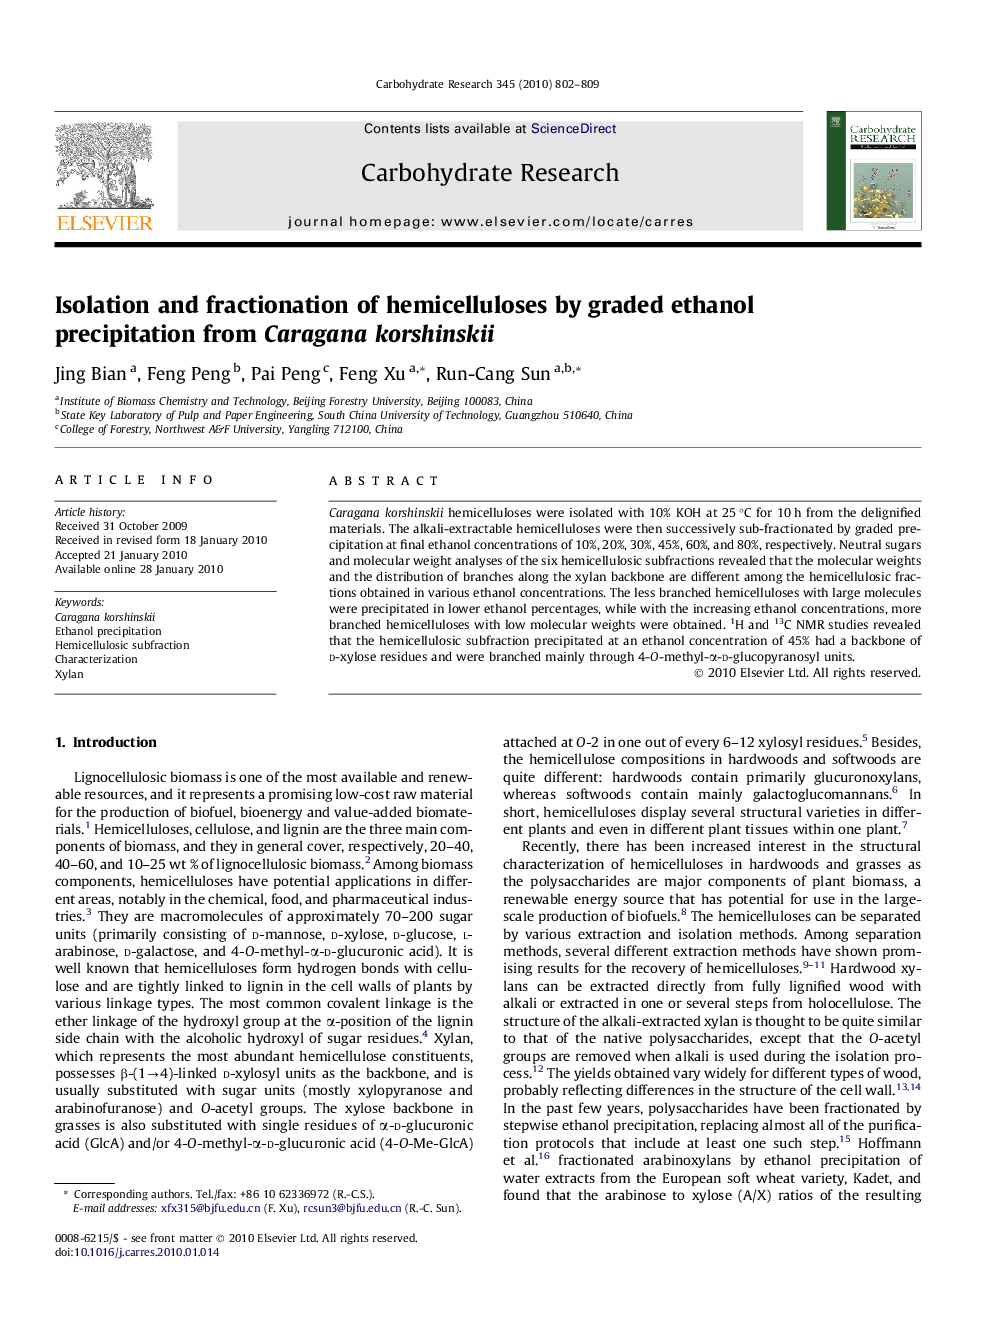 Isolation and fractionation of hemicelluloses by graded ethanol precipitation from Caragana korshinskii